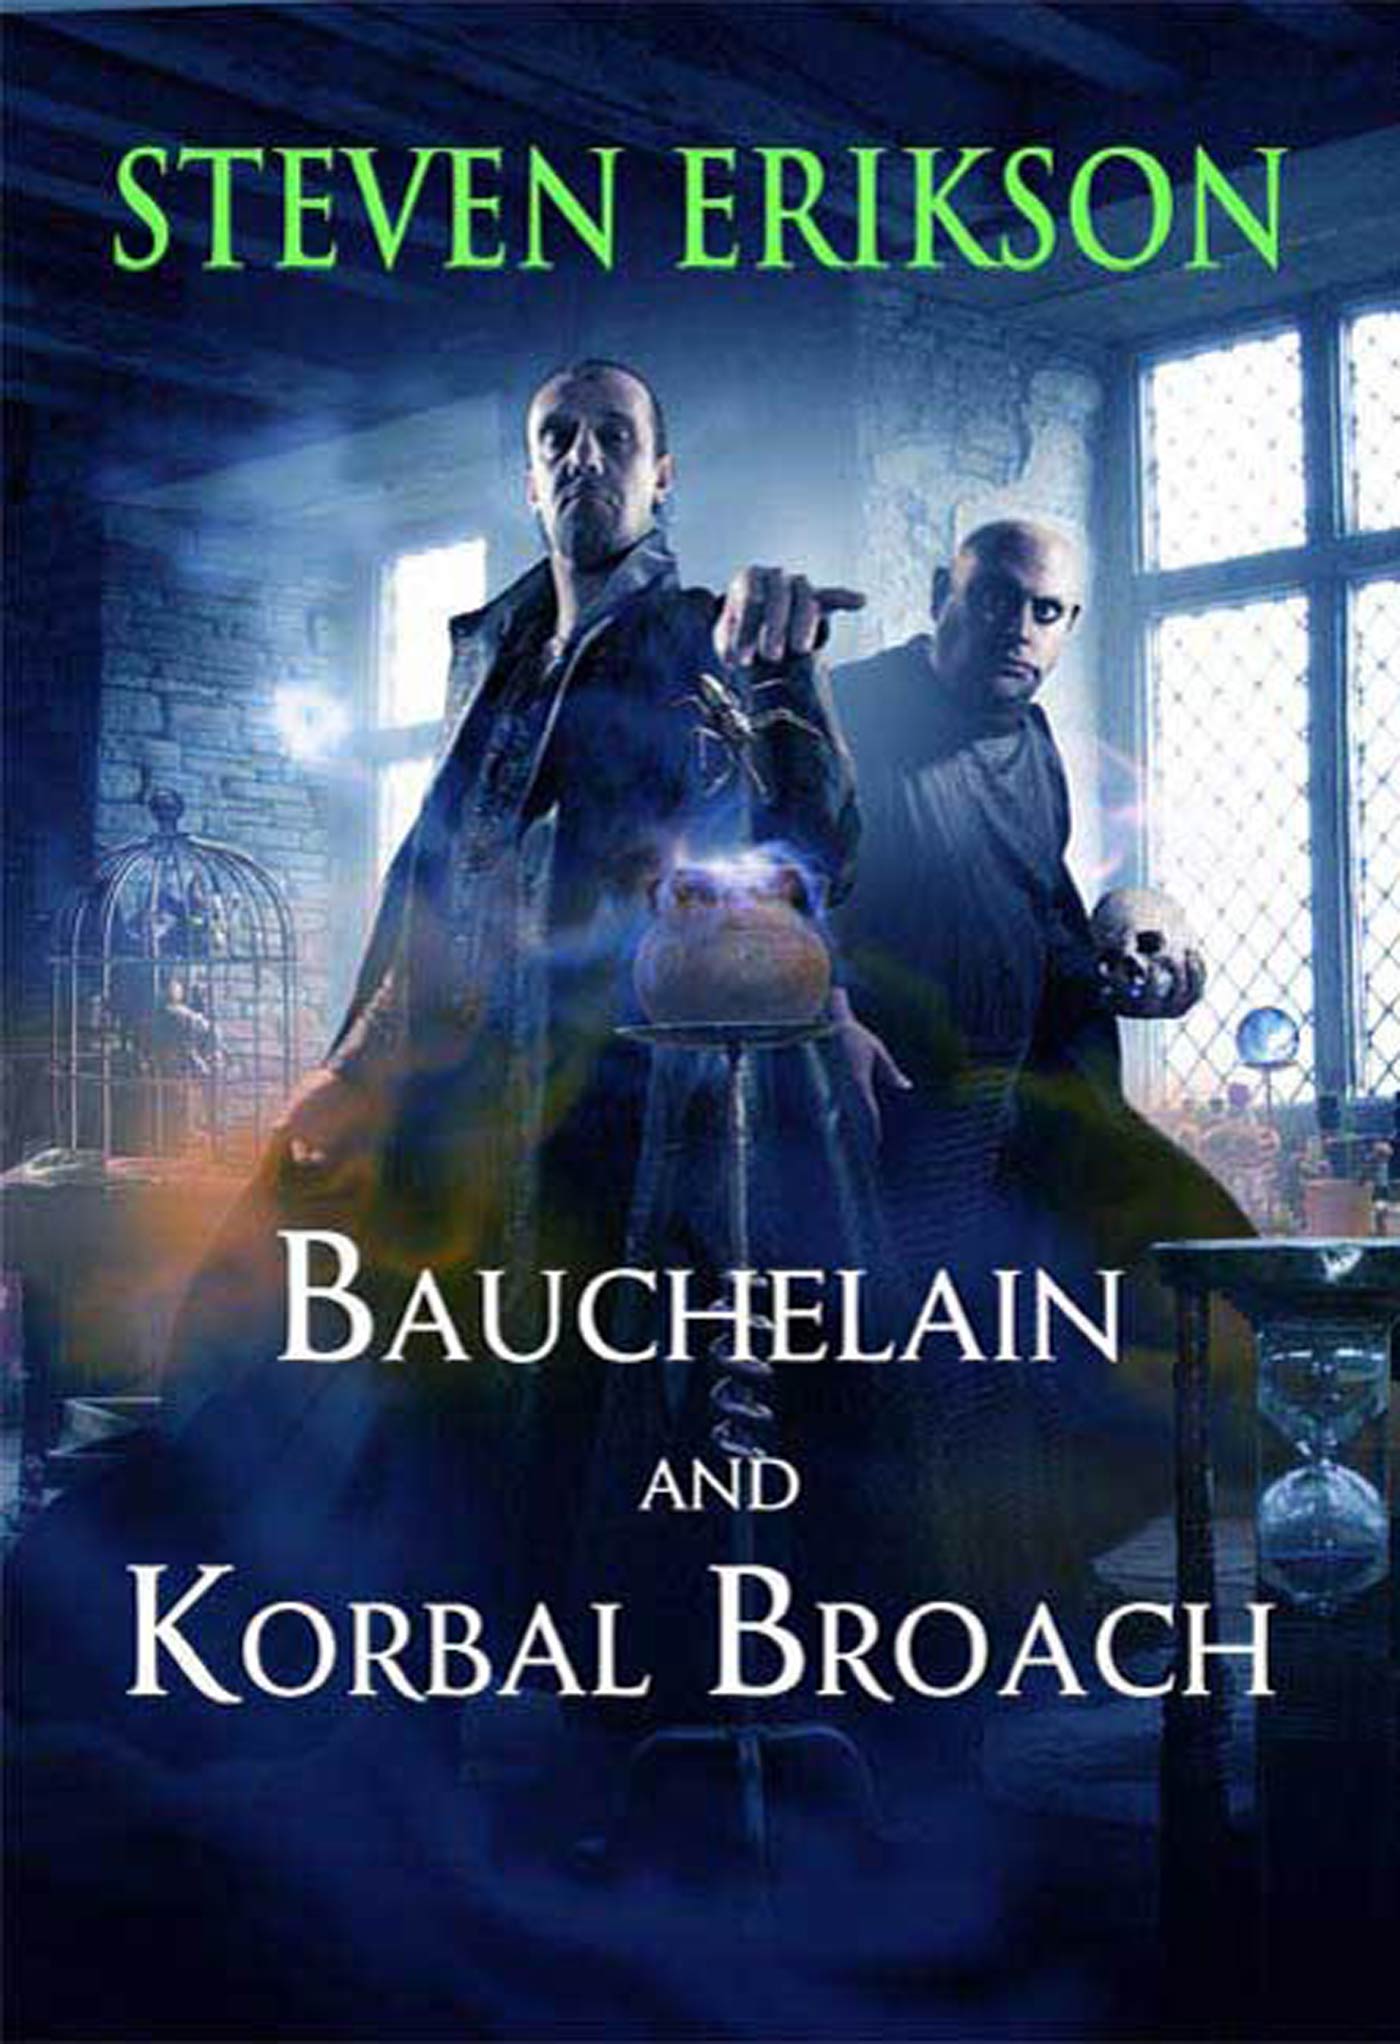 Bauchelain and Korbal Broach : Volume One: Three Short Novels of the Malazan Empire by Steven Erikson